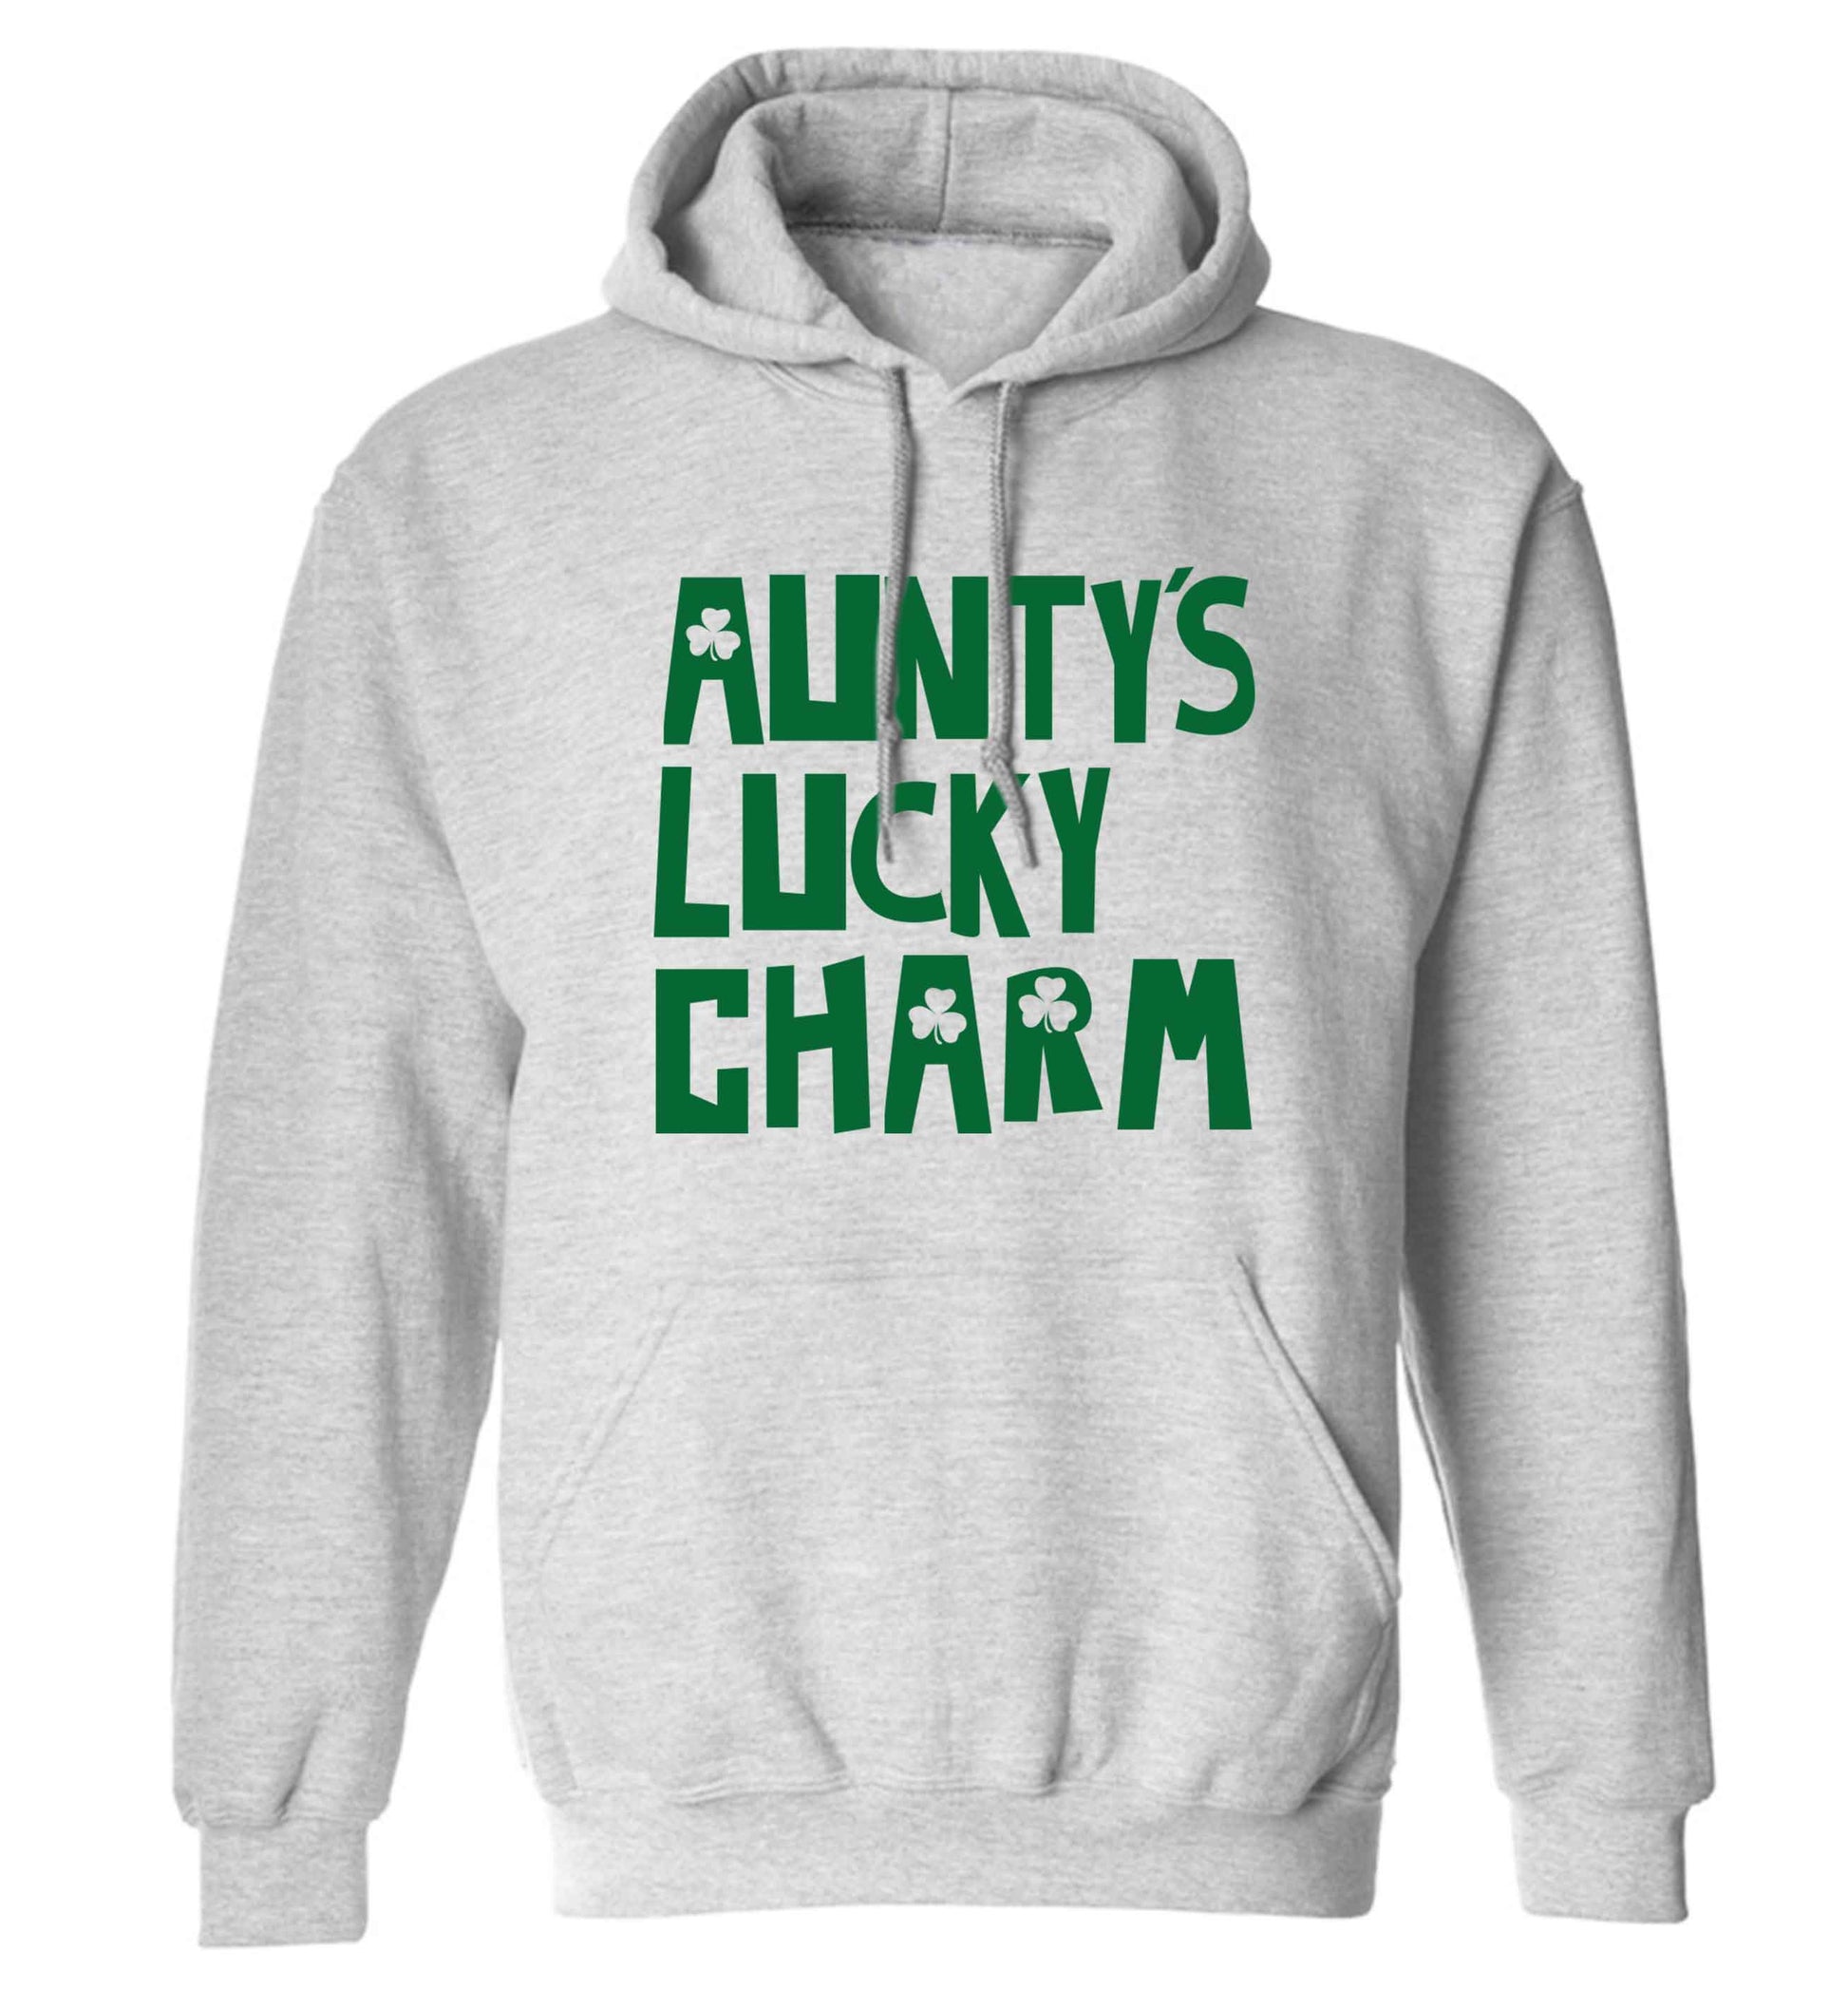 Aunty's lucky charm adults unisex grey hoodie 2XL